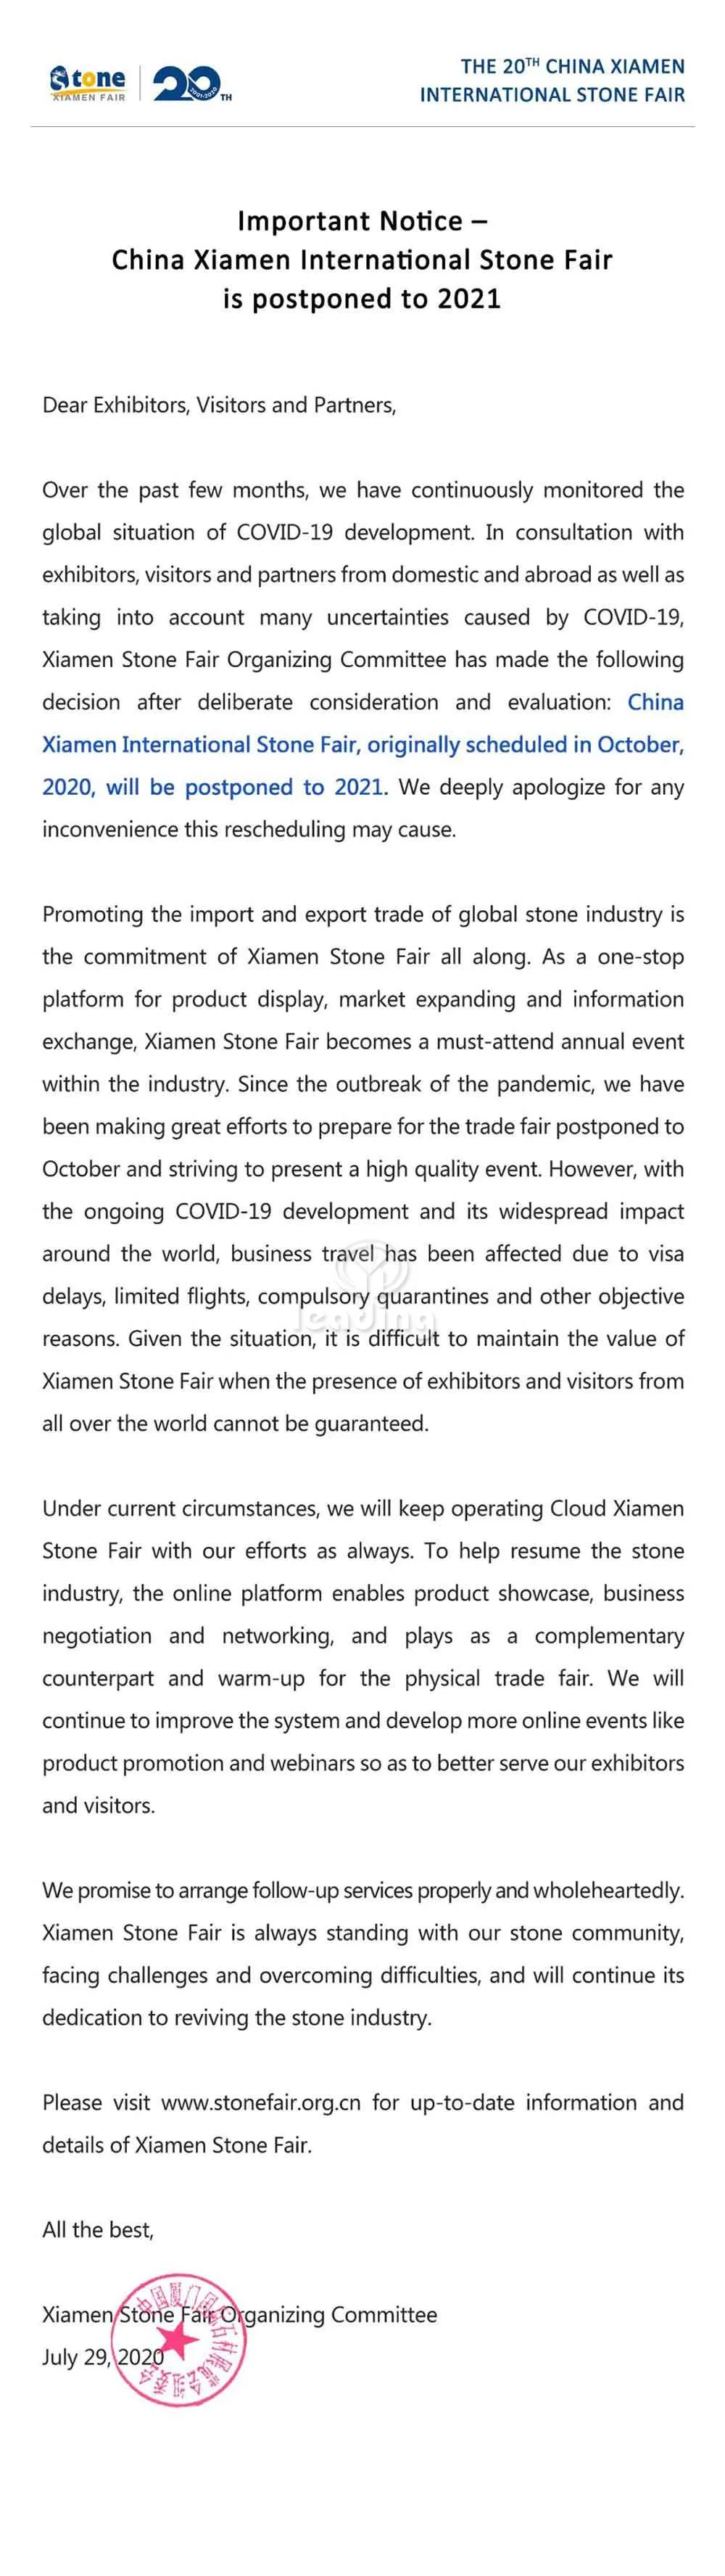 Important-Notice--China-Xiamen-International-Stone-Fair-is-postponed-to-2021.jpg